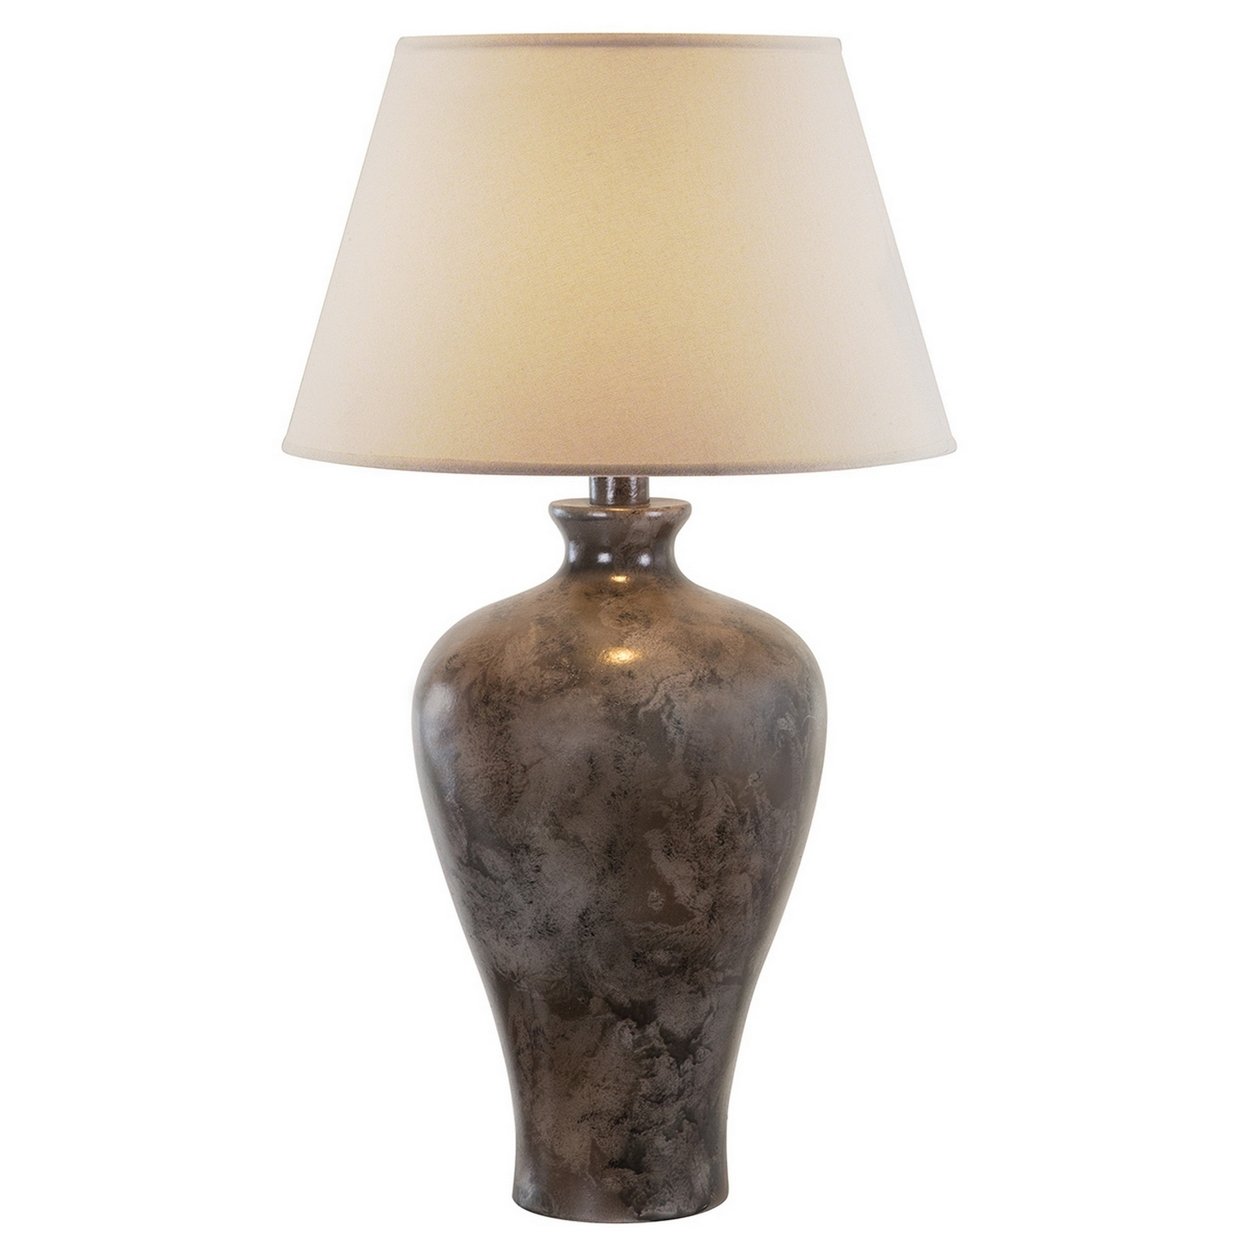 Kiza 29 Inch Table Lamp, Elongated Curved Urn, Dark Brown Stone Design- Saltoro Sherpi